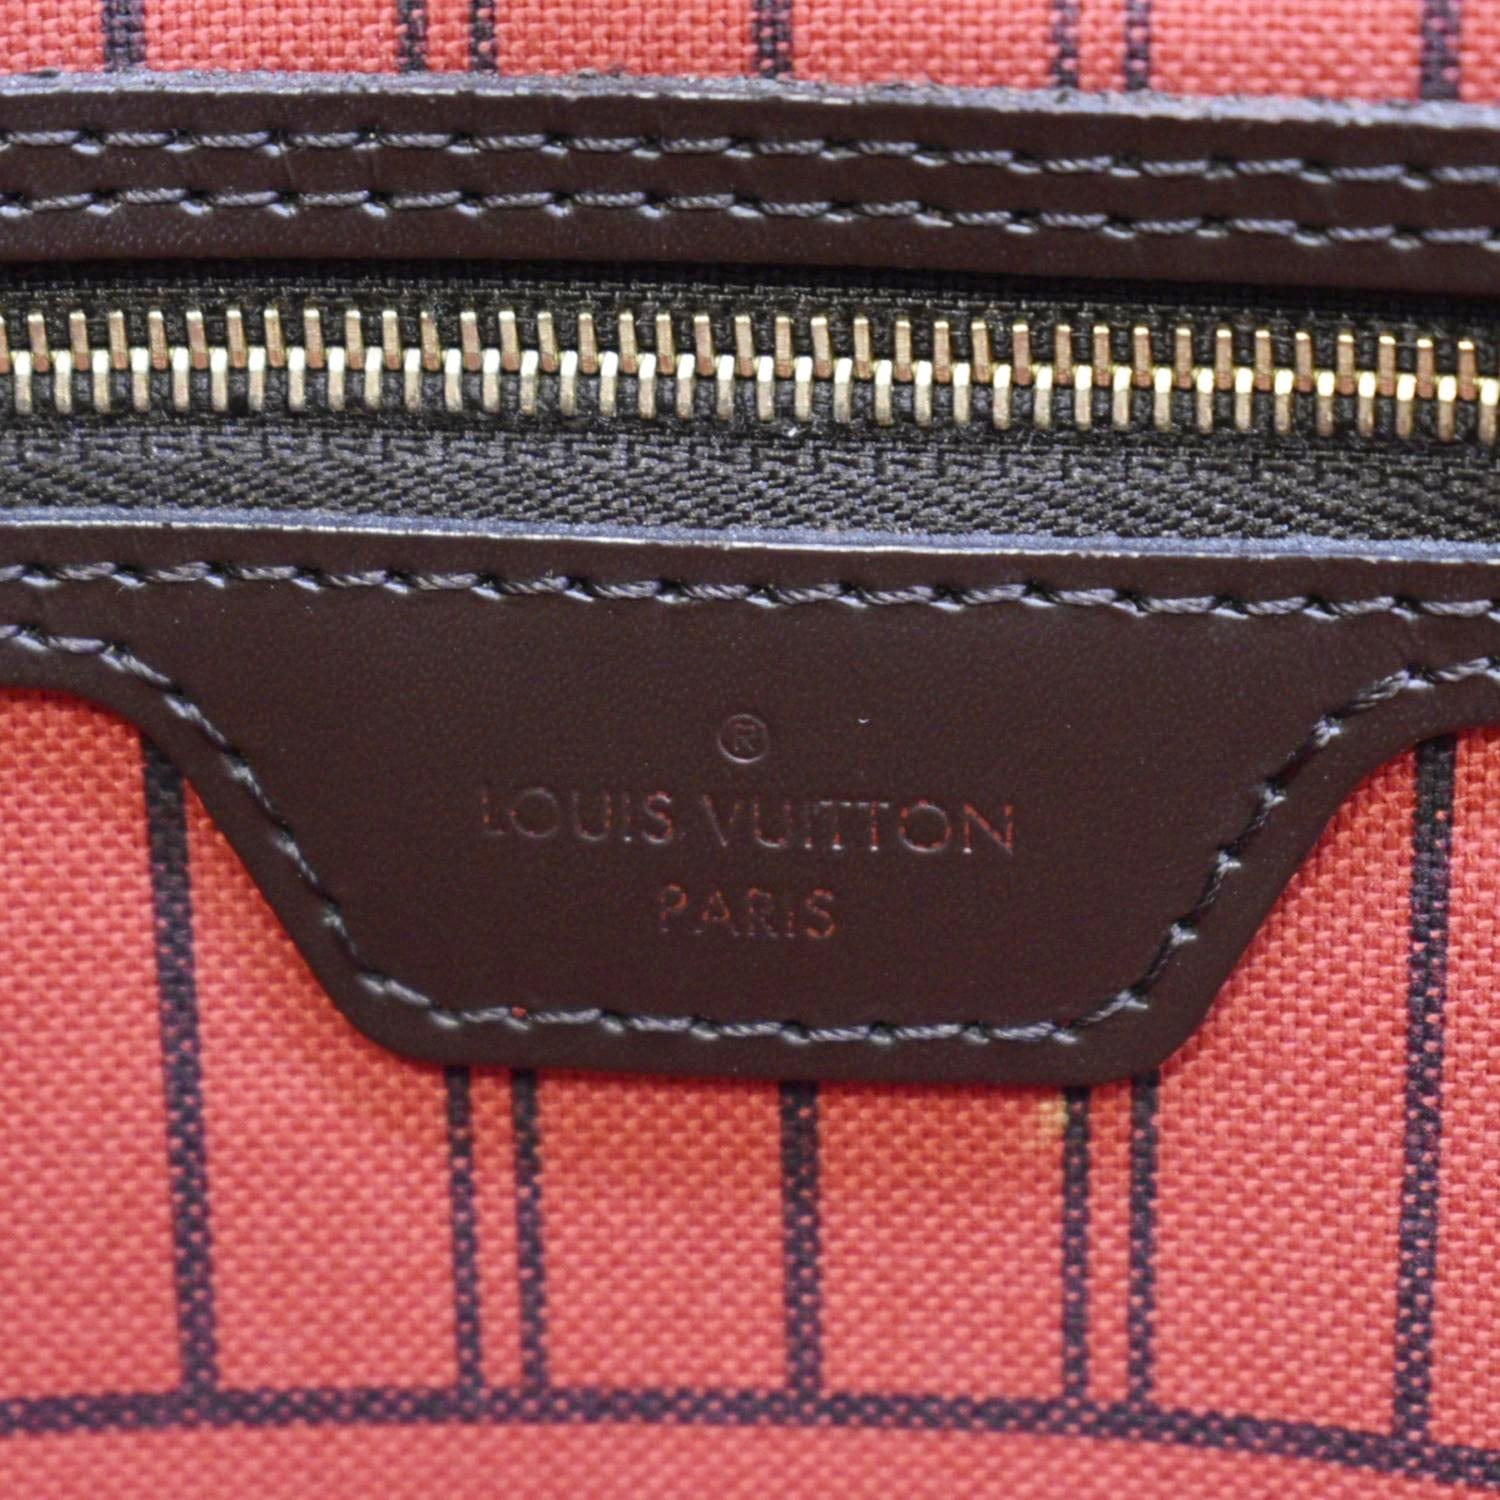 Louis Vuitton Neverfull mm Damier Ebene Tote Bag Brown